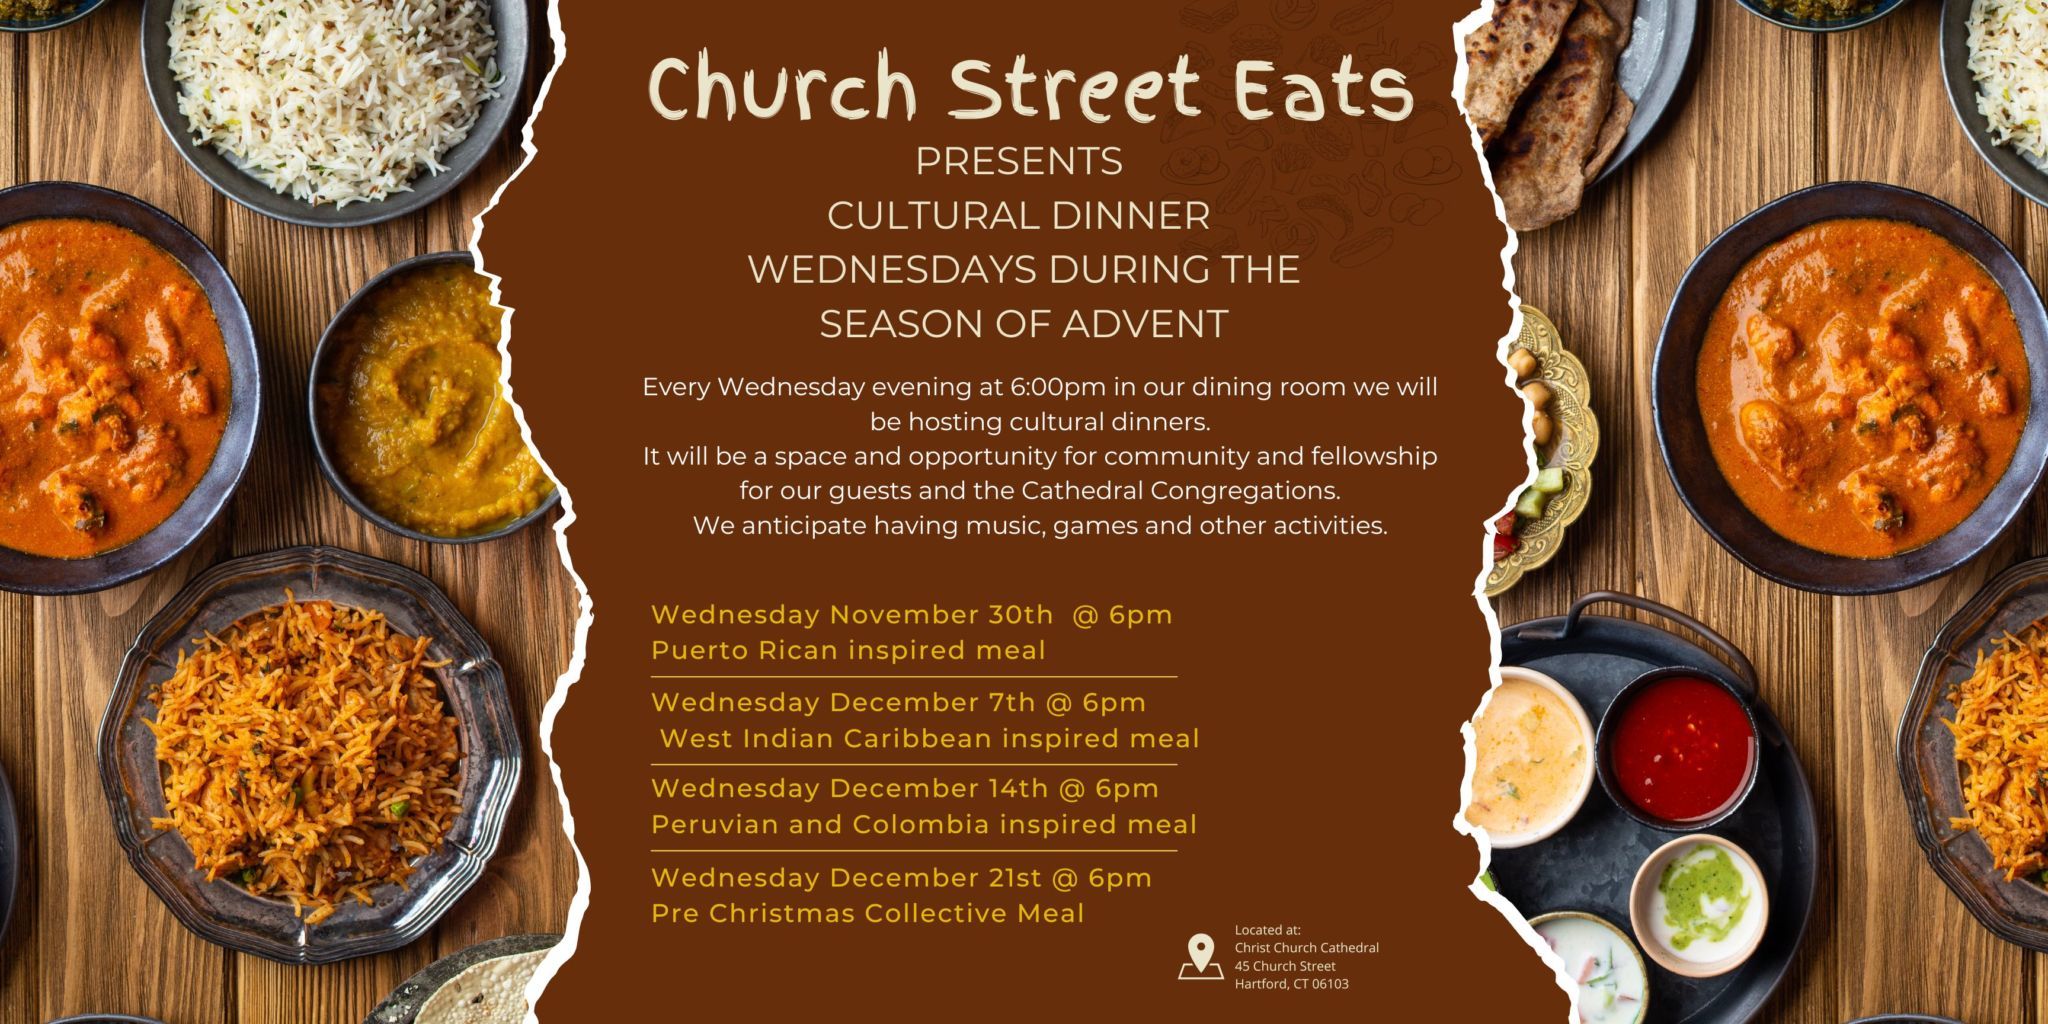 Church Street Eats ~ cultural dinner Wednesdays during the season of advent